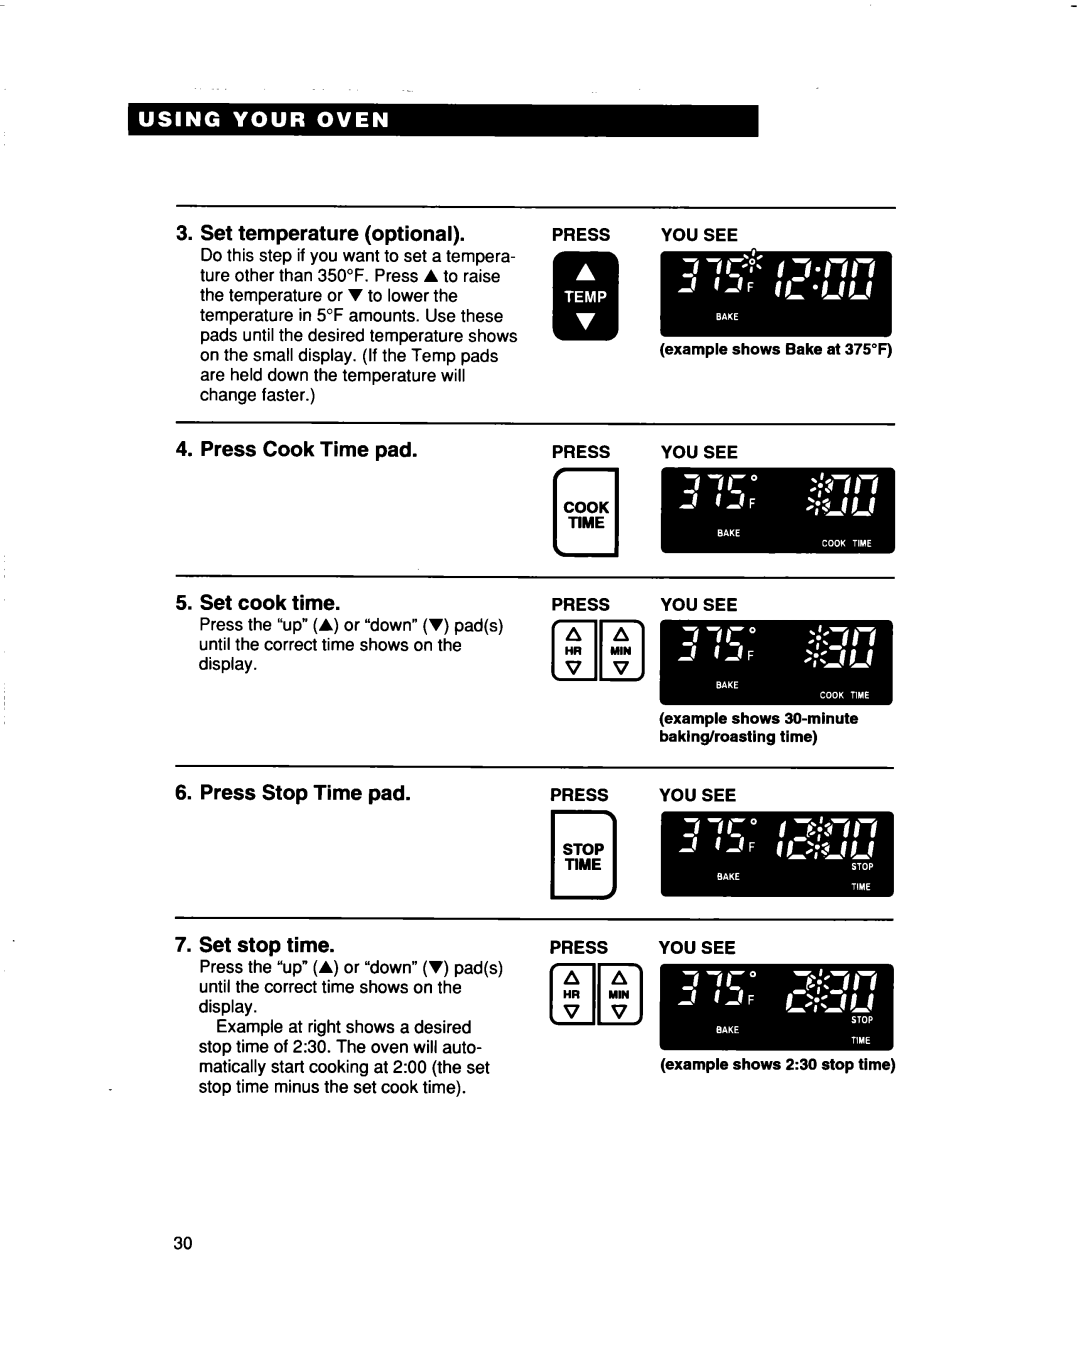 Whirlpool RBD307PD Press Cook Time pad, Set cook time, Press Stop Time pad, Set stop time, Set temperature optional 